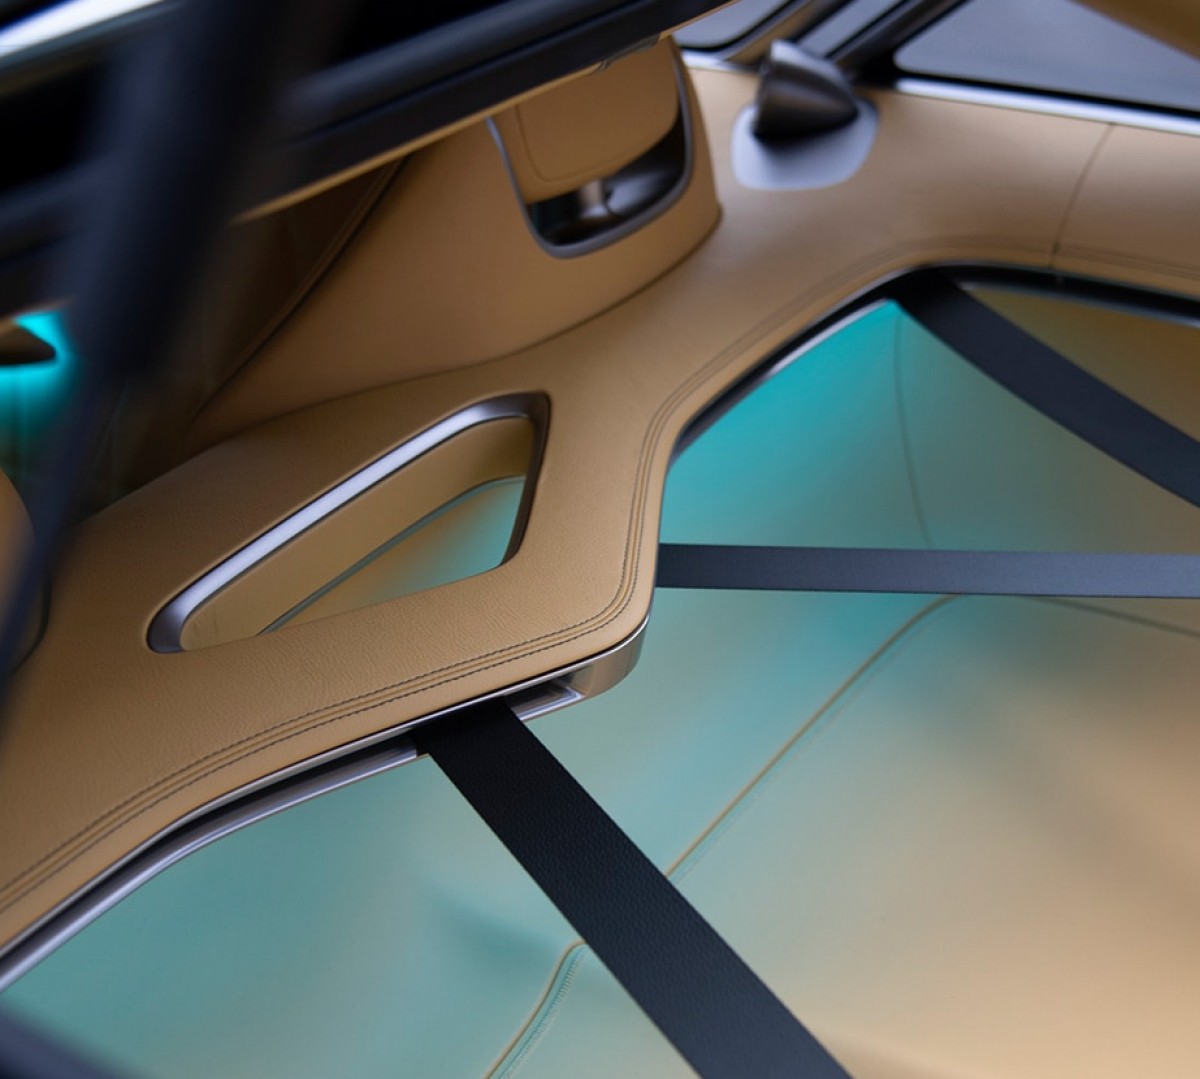 Genesis reveals the interior of X Speedium Coupe at Pebble Beach